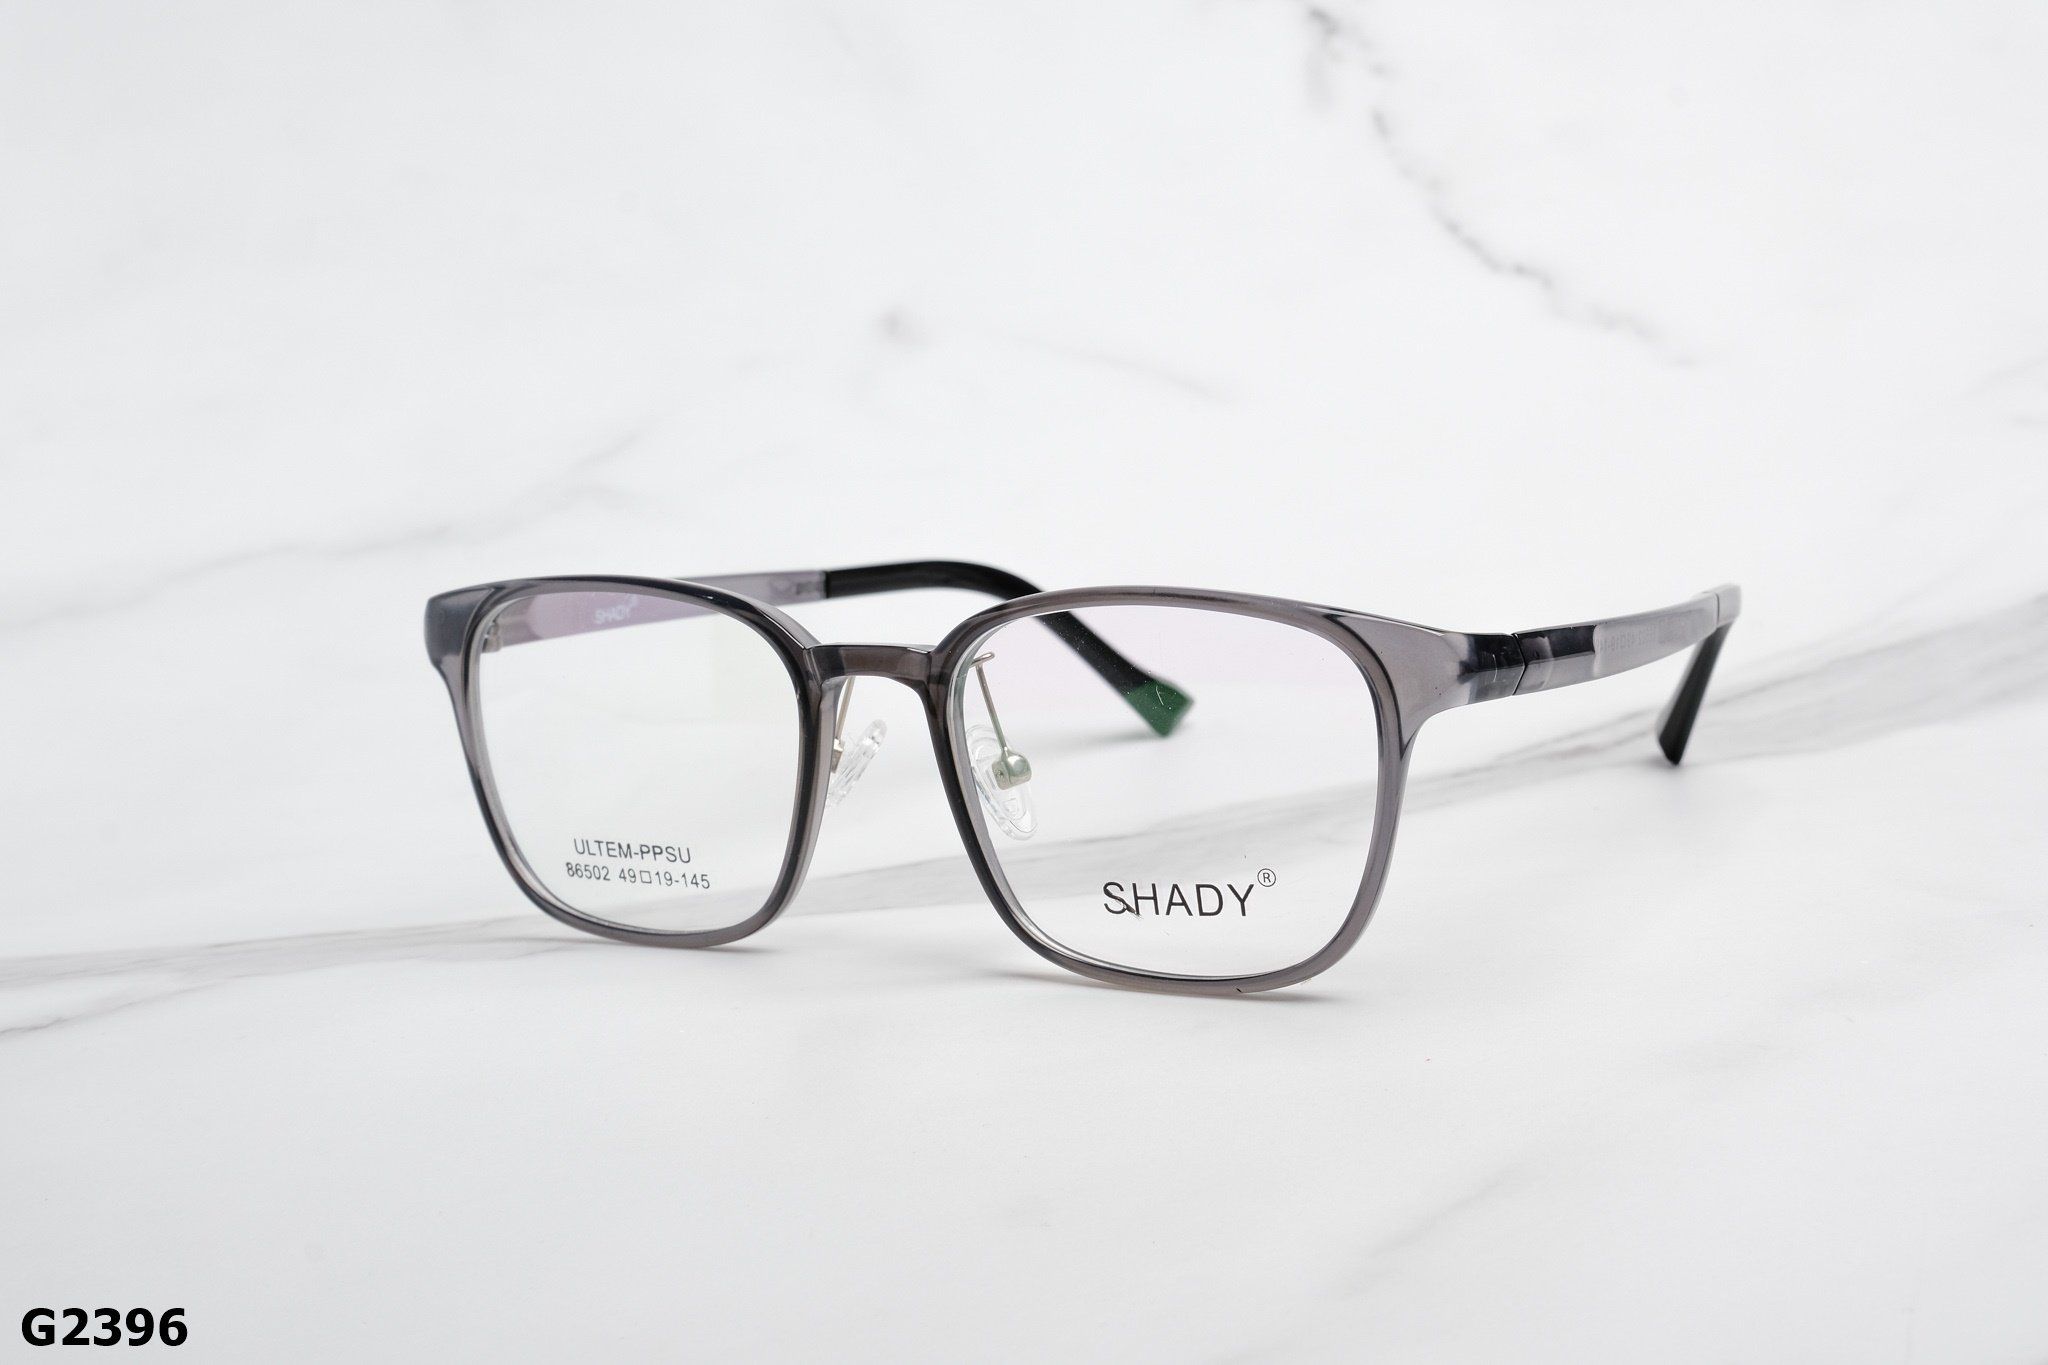  SHADY Eyewear - Glasses - G2396 